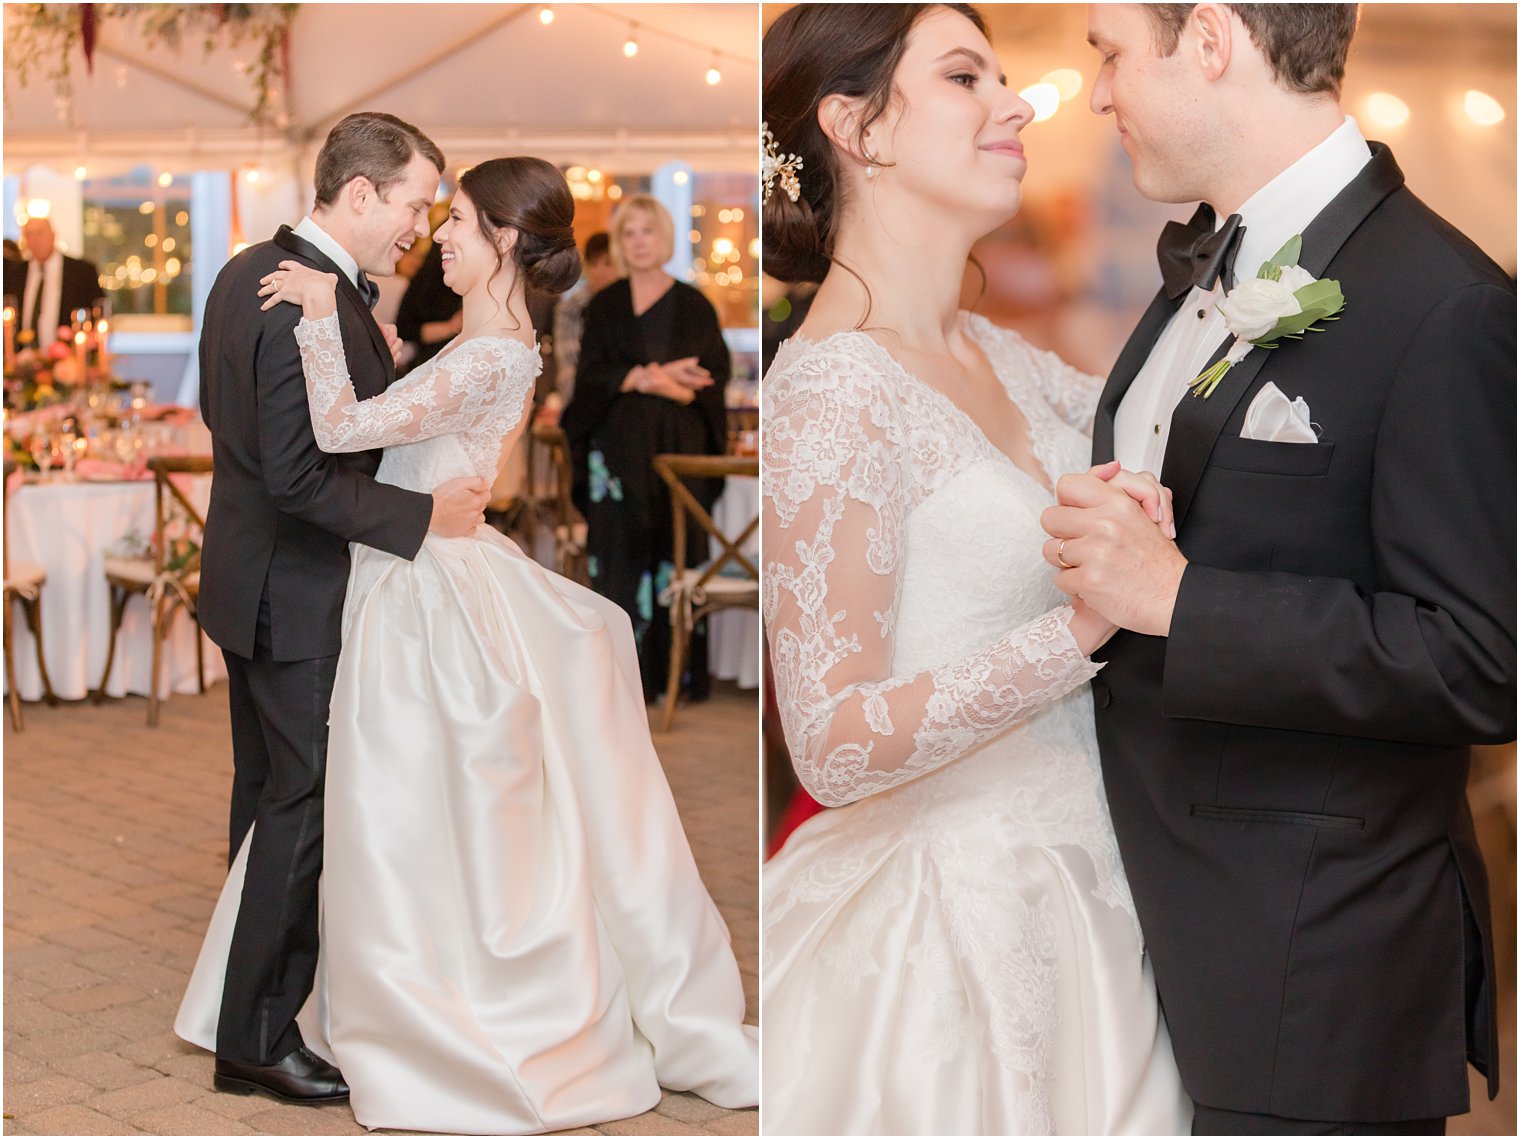 couple dances together during NJ wedding reception